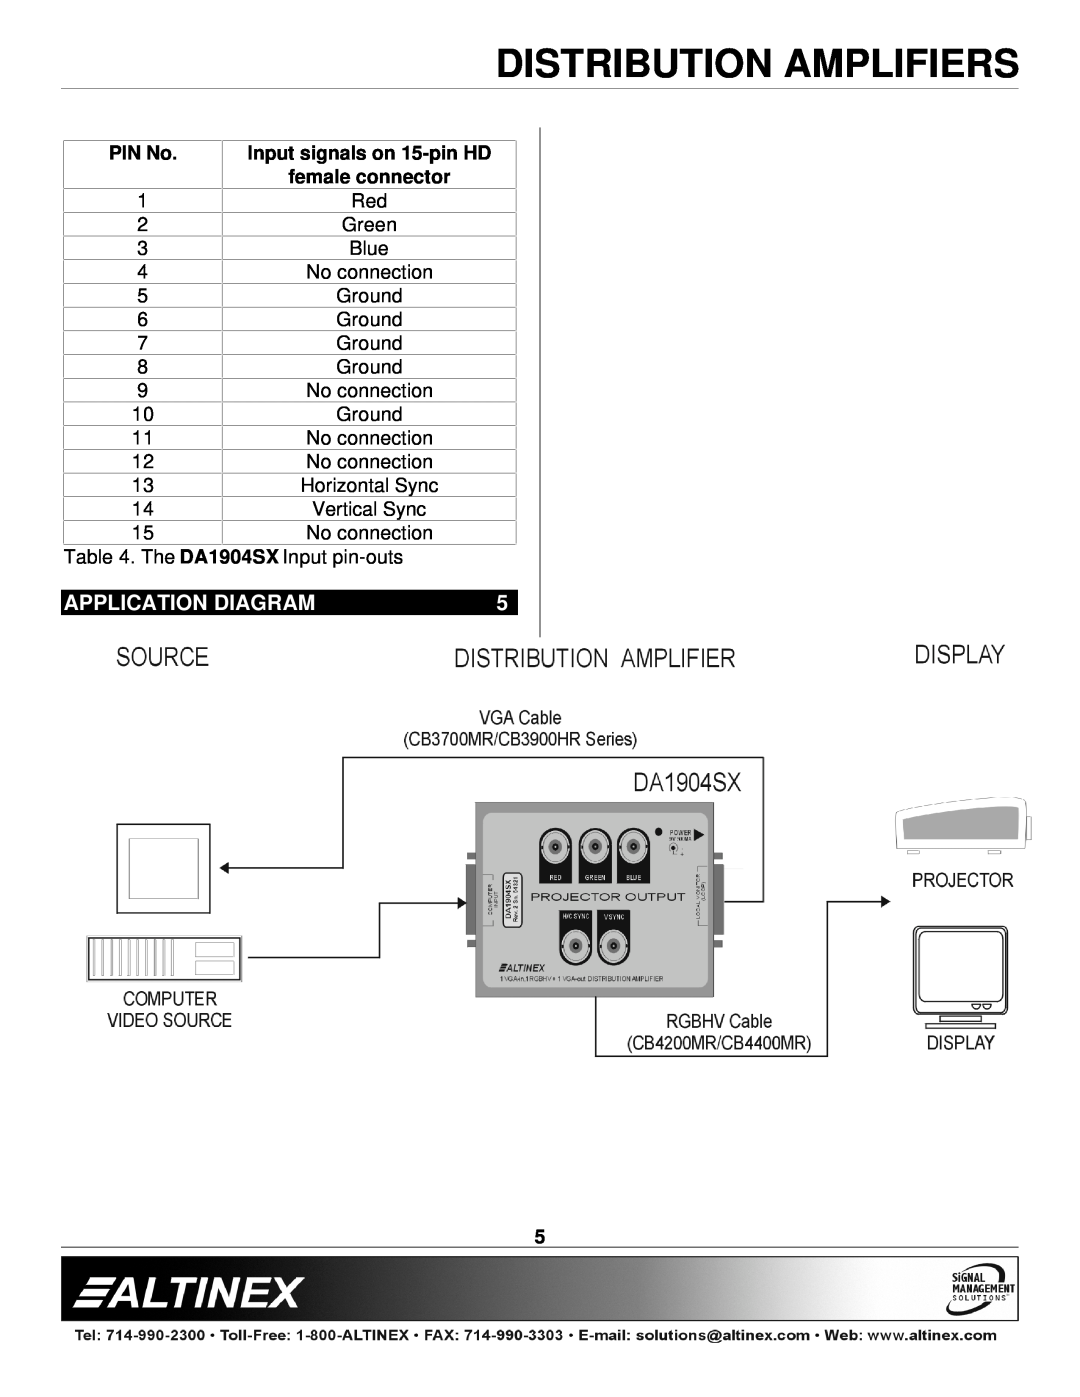 Altinex DA1904SX manual Application Diagram, PIN No, Input signals on 15-pinHD female connector, Distribution Amplifiers 